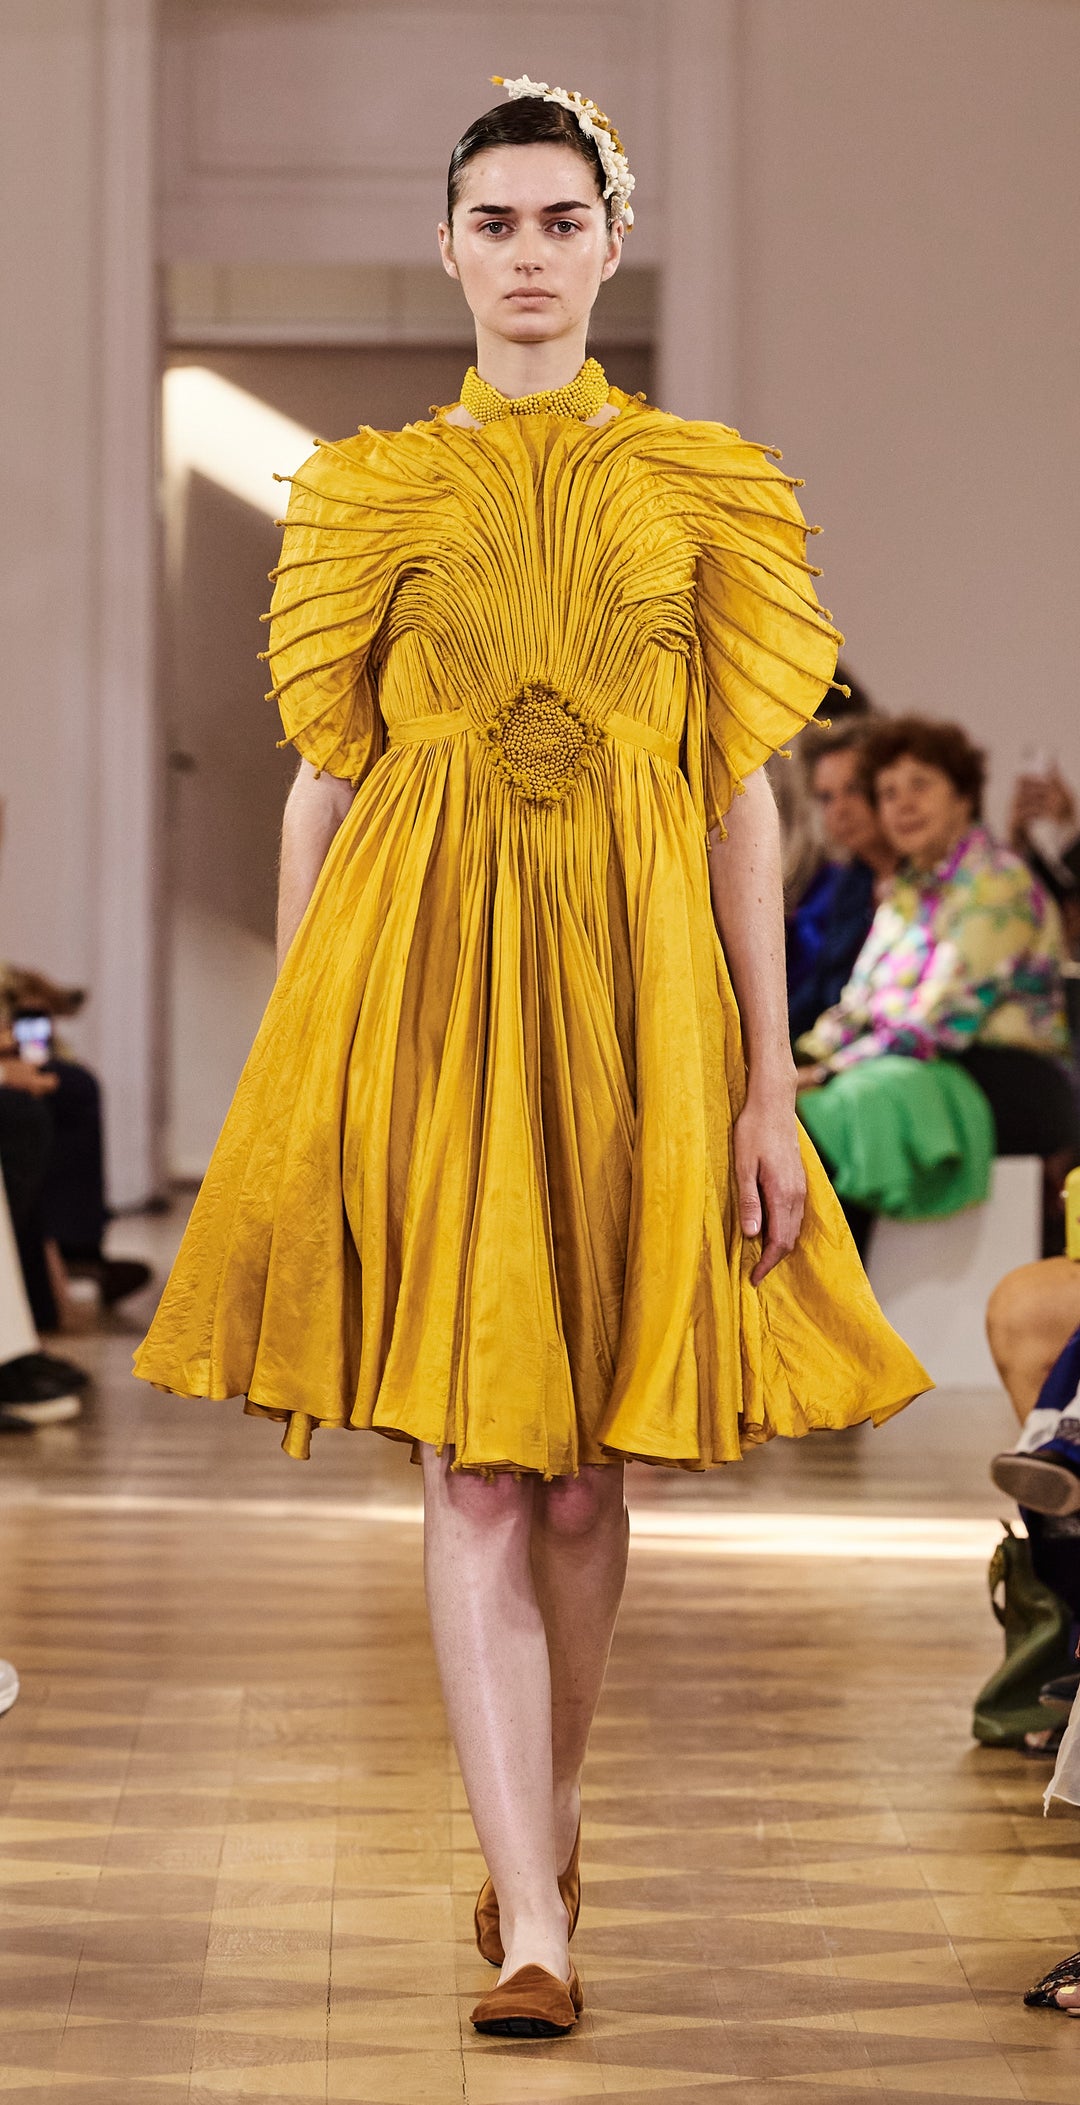 Mustard Yellow Corded Dress